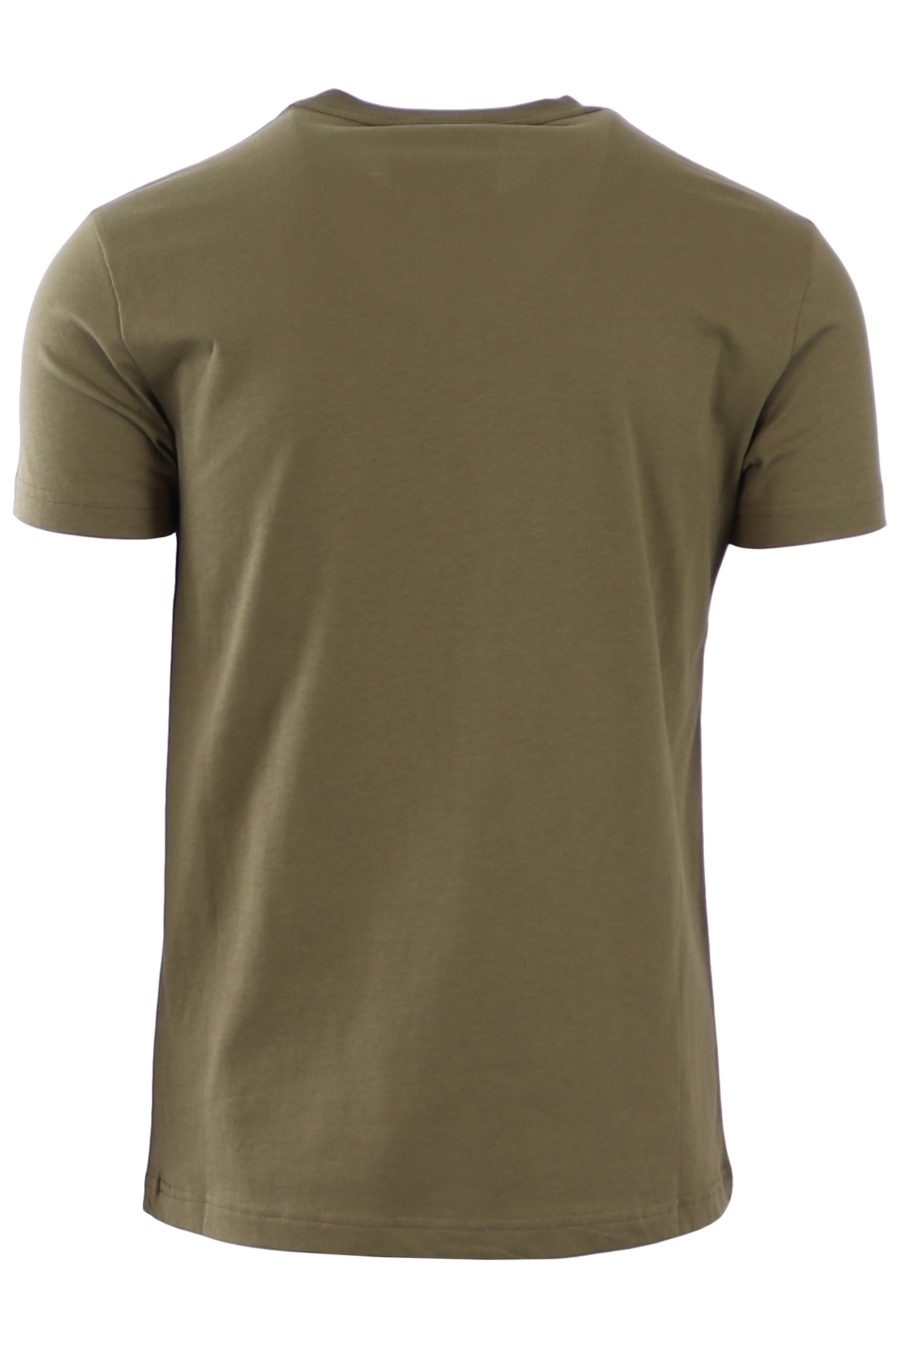 T-shirt Versace Jeans Couture com logótipo militar em preto - 21e0b5e9644a2f7ae373ae6c67e1af0f921e82b8